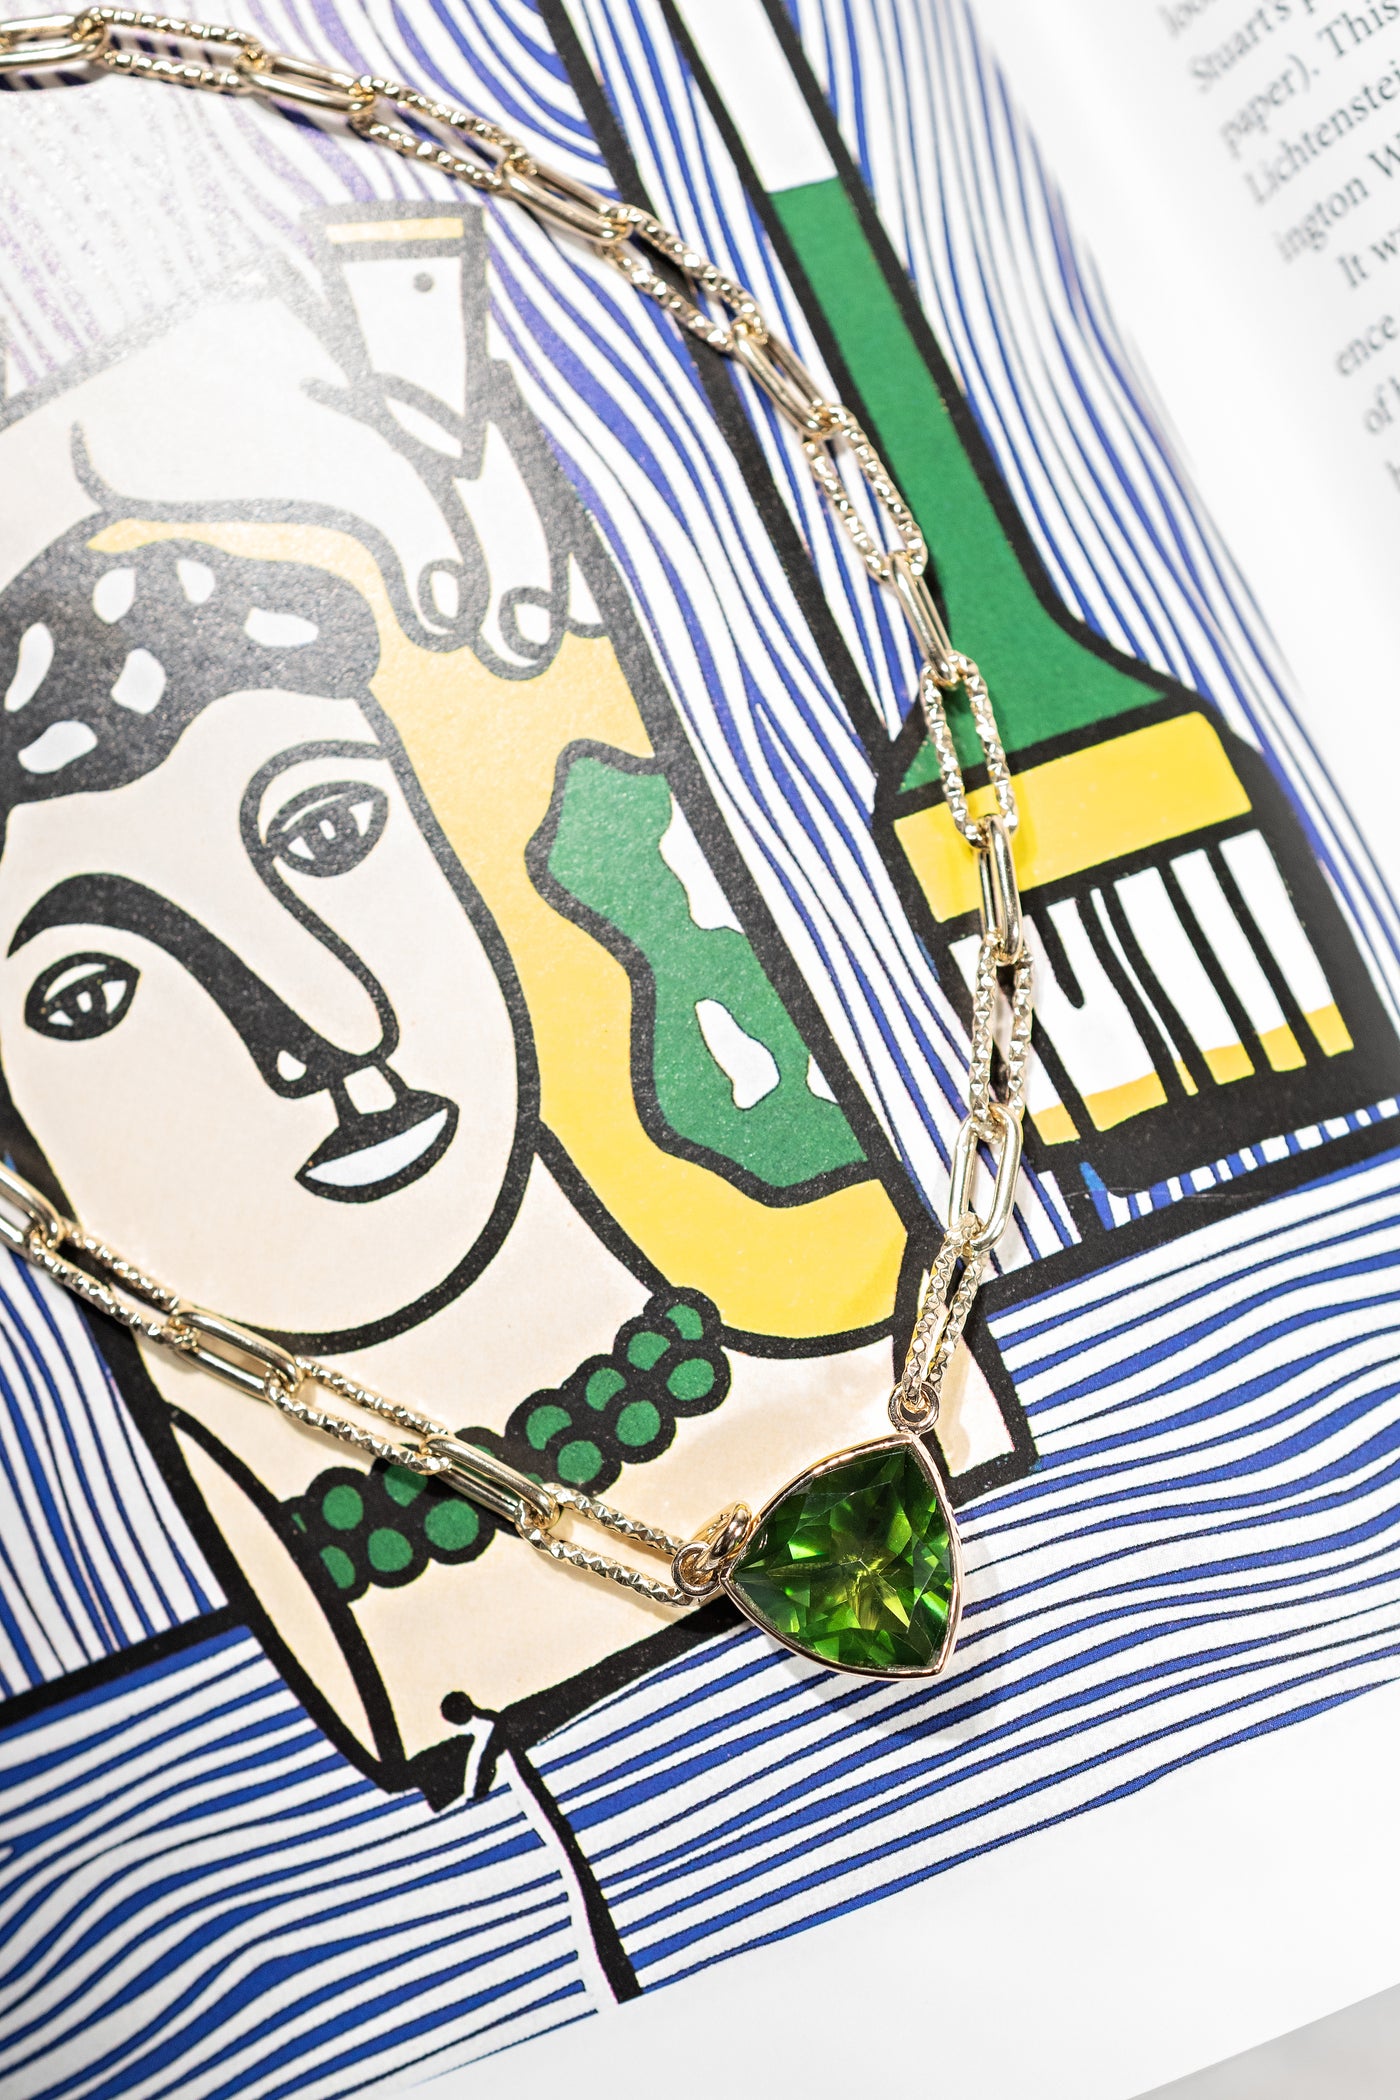 11.5ct Vivid Green Peridot Necklace - 14k yellow gold